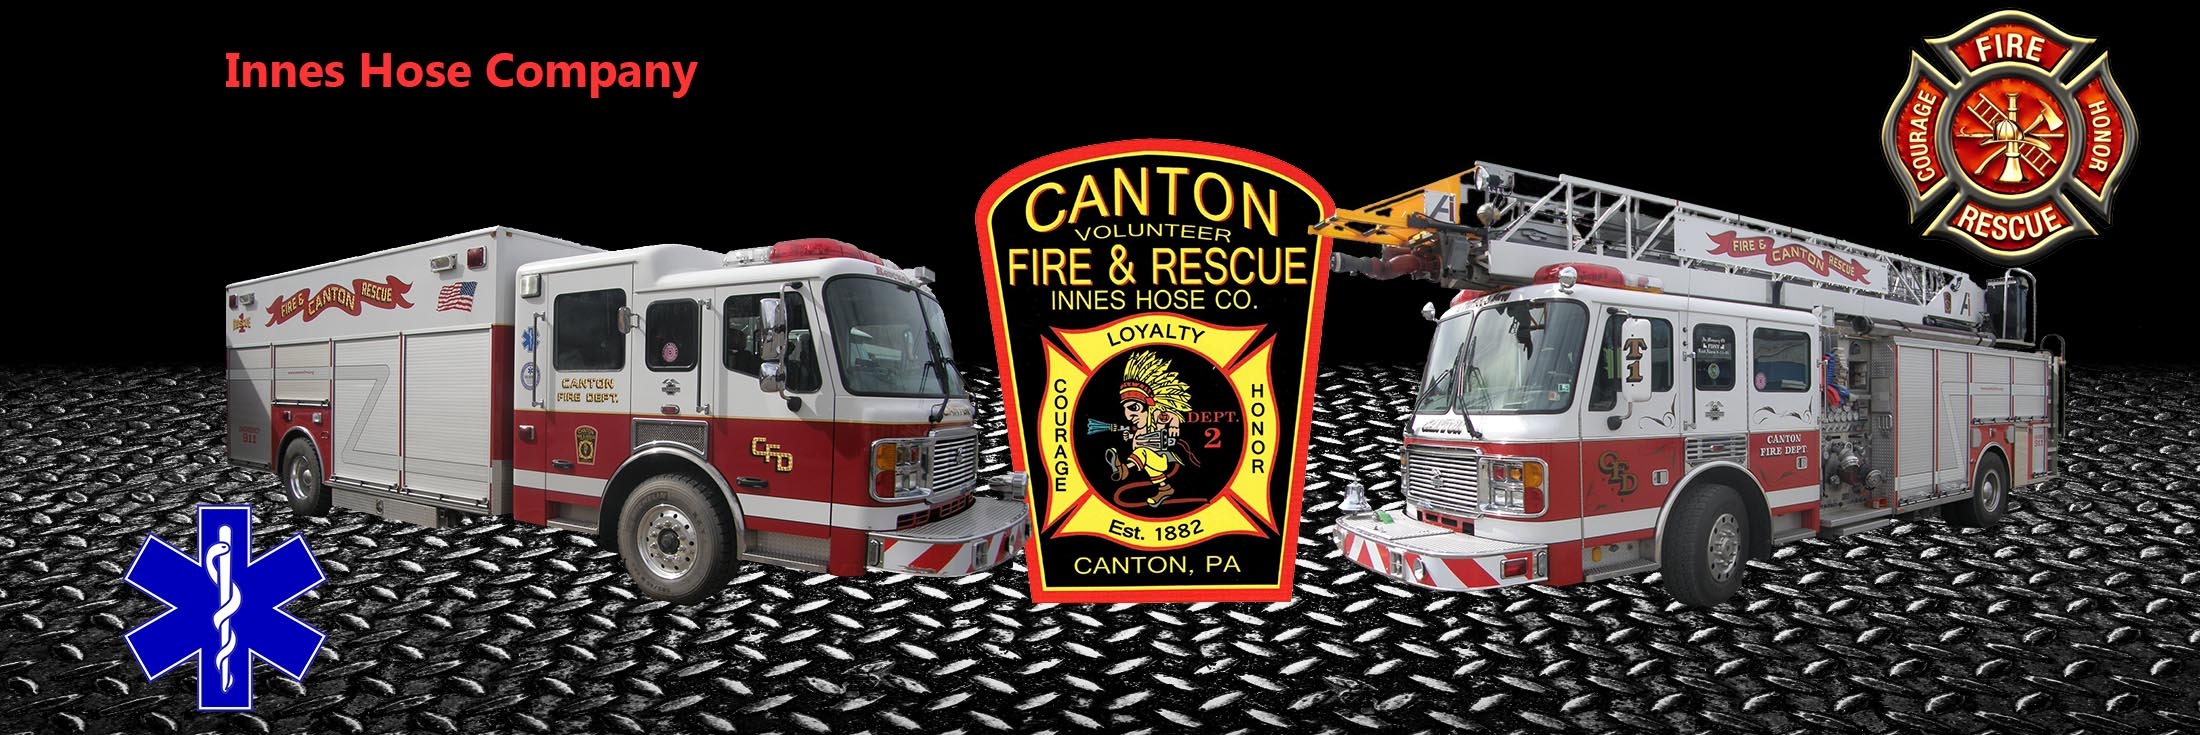 Canton Volunteer Fire Department / Innes Hose Company Inc. - Canton PA